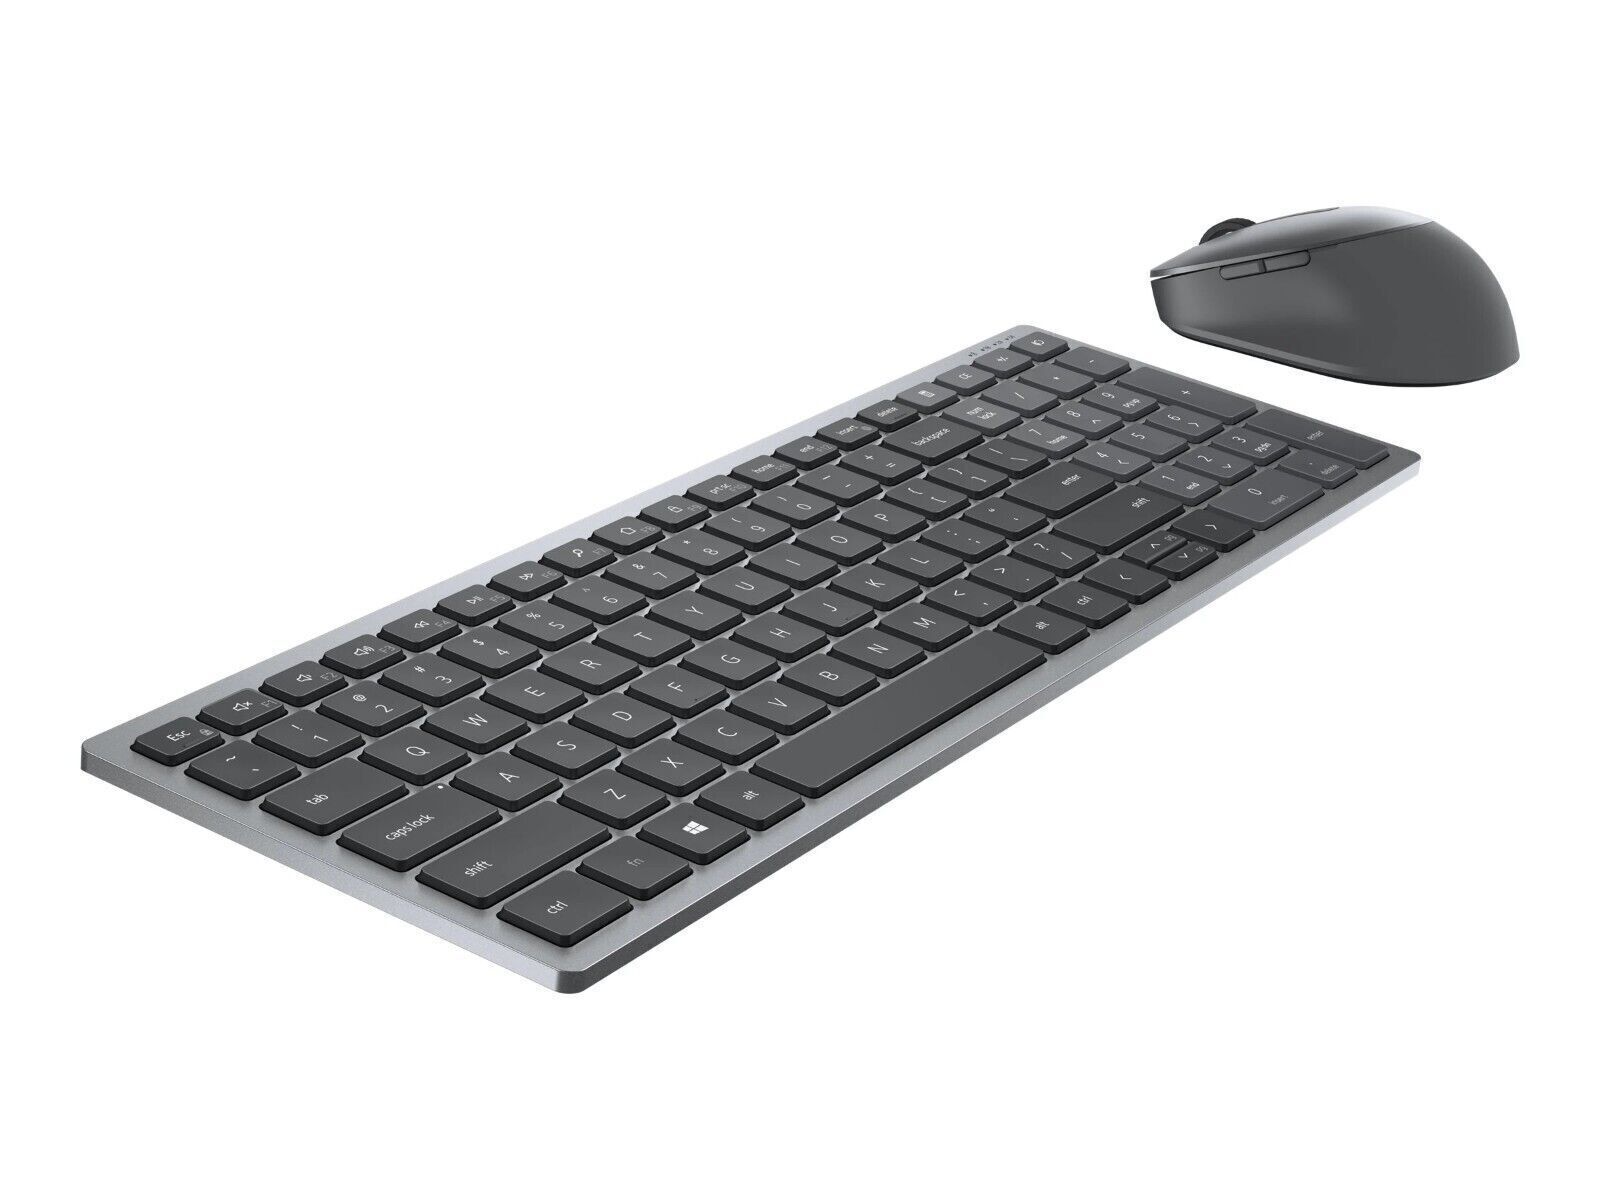 Dell KM7120W-GY-US KM7120W Keyboard & Mouse - Wireless